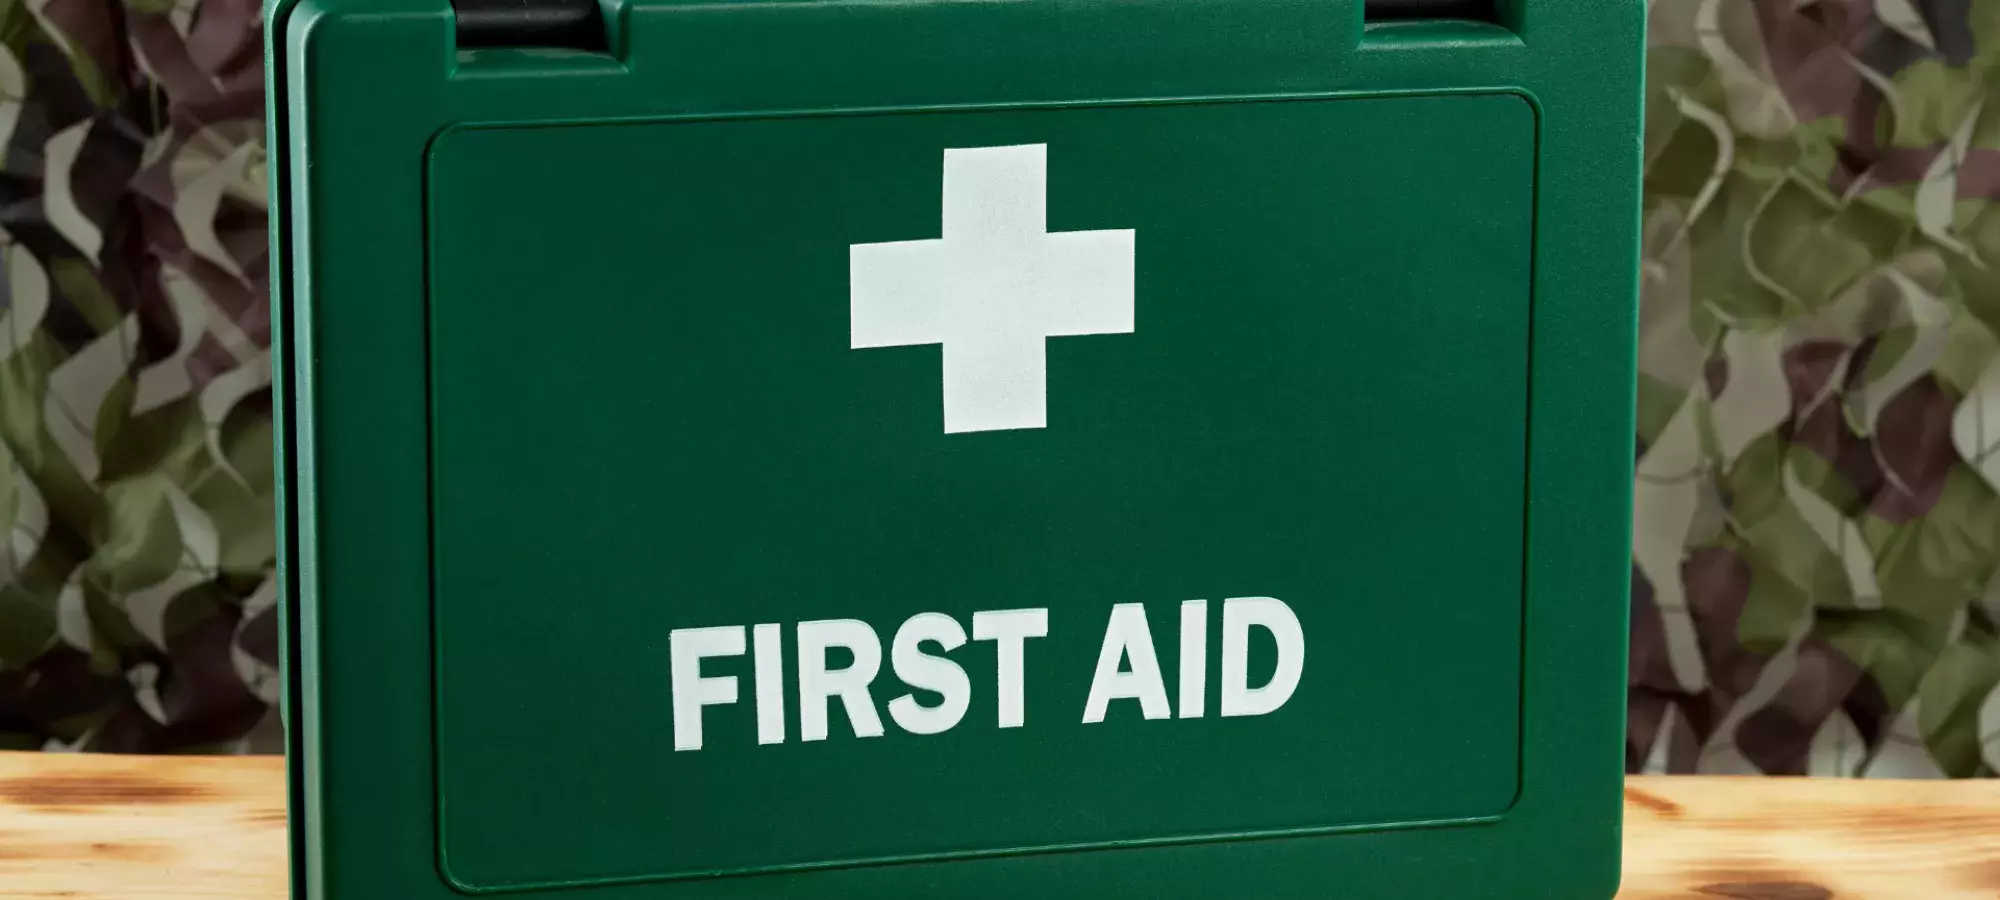 First aid event medics